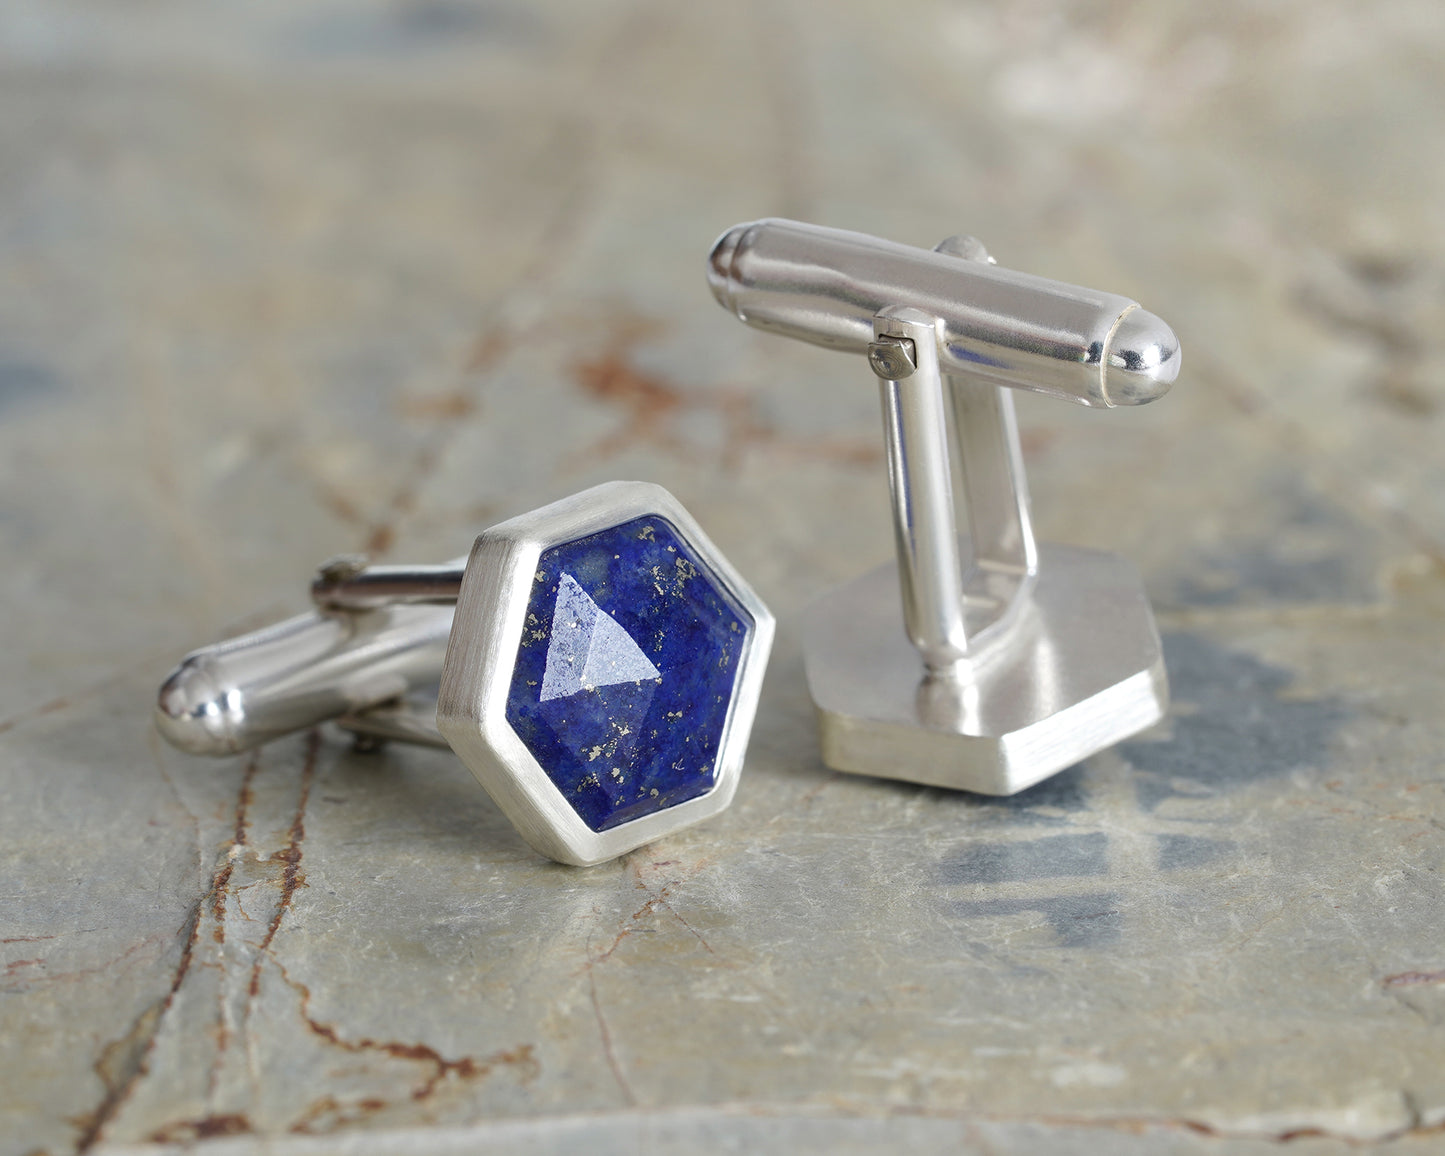 9.6ct Lapis Lazuli Cufflinks in Sterling Silver